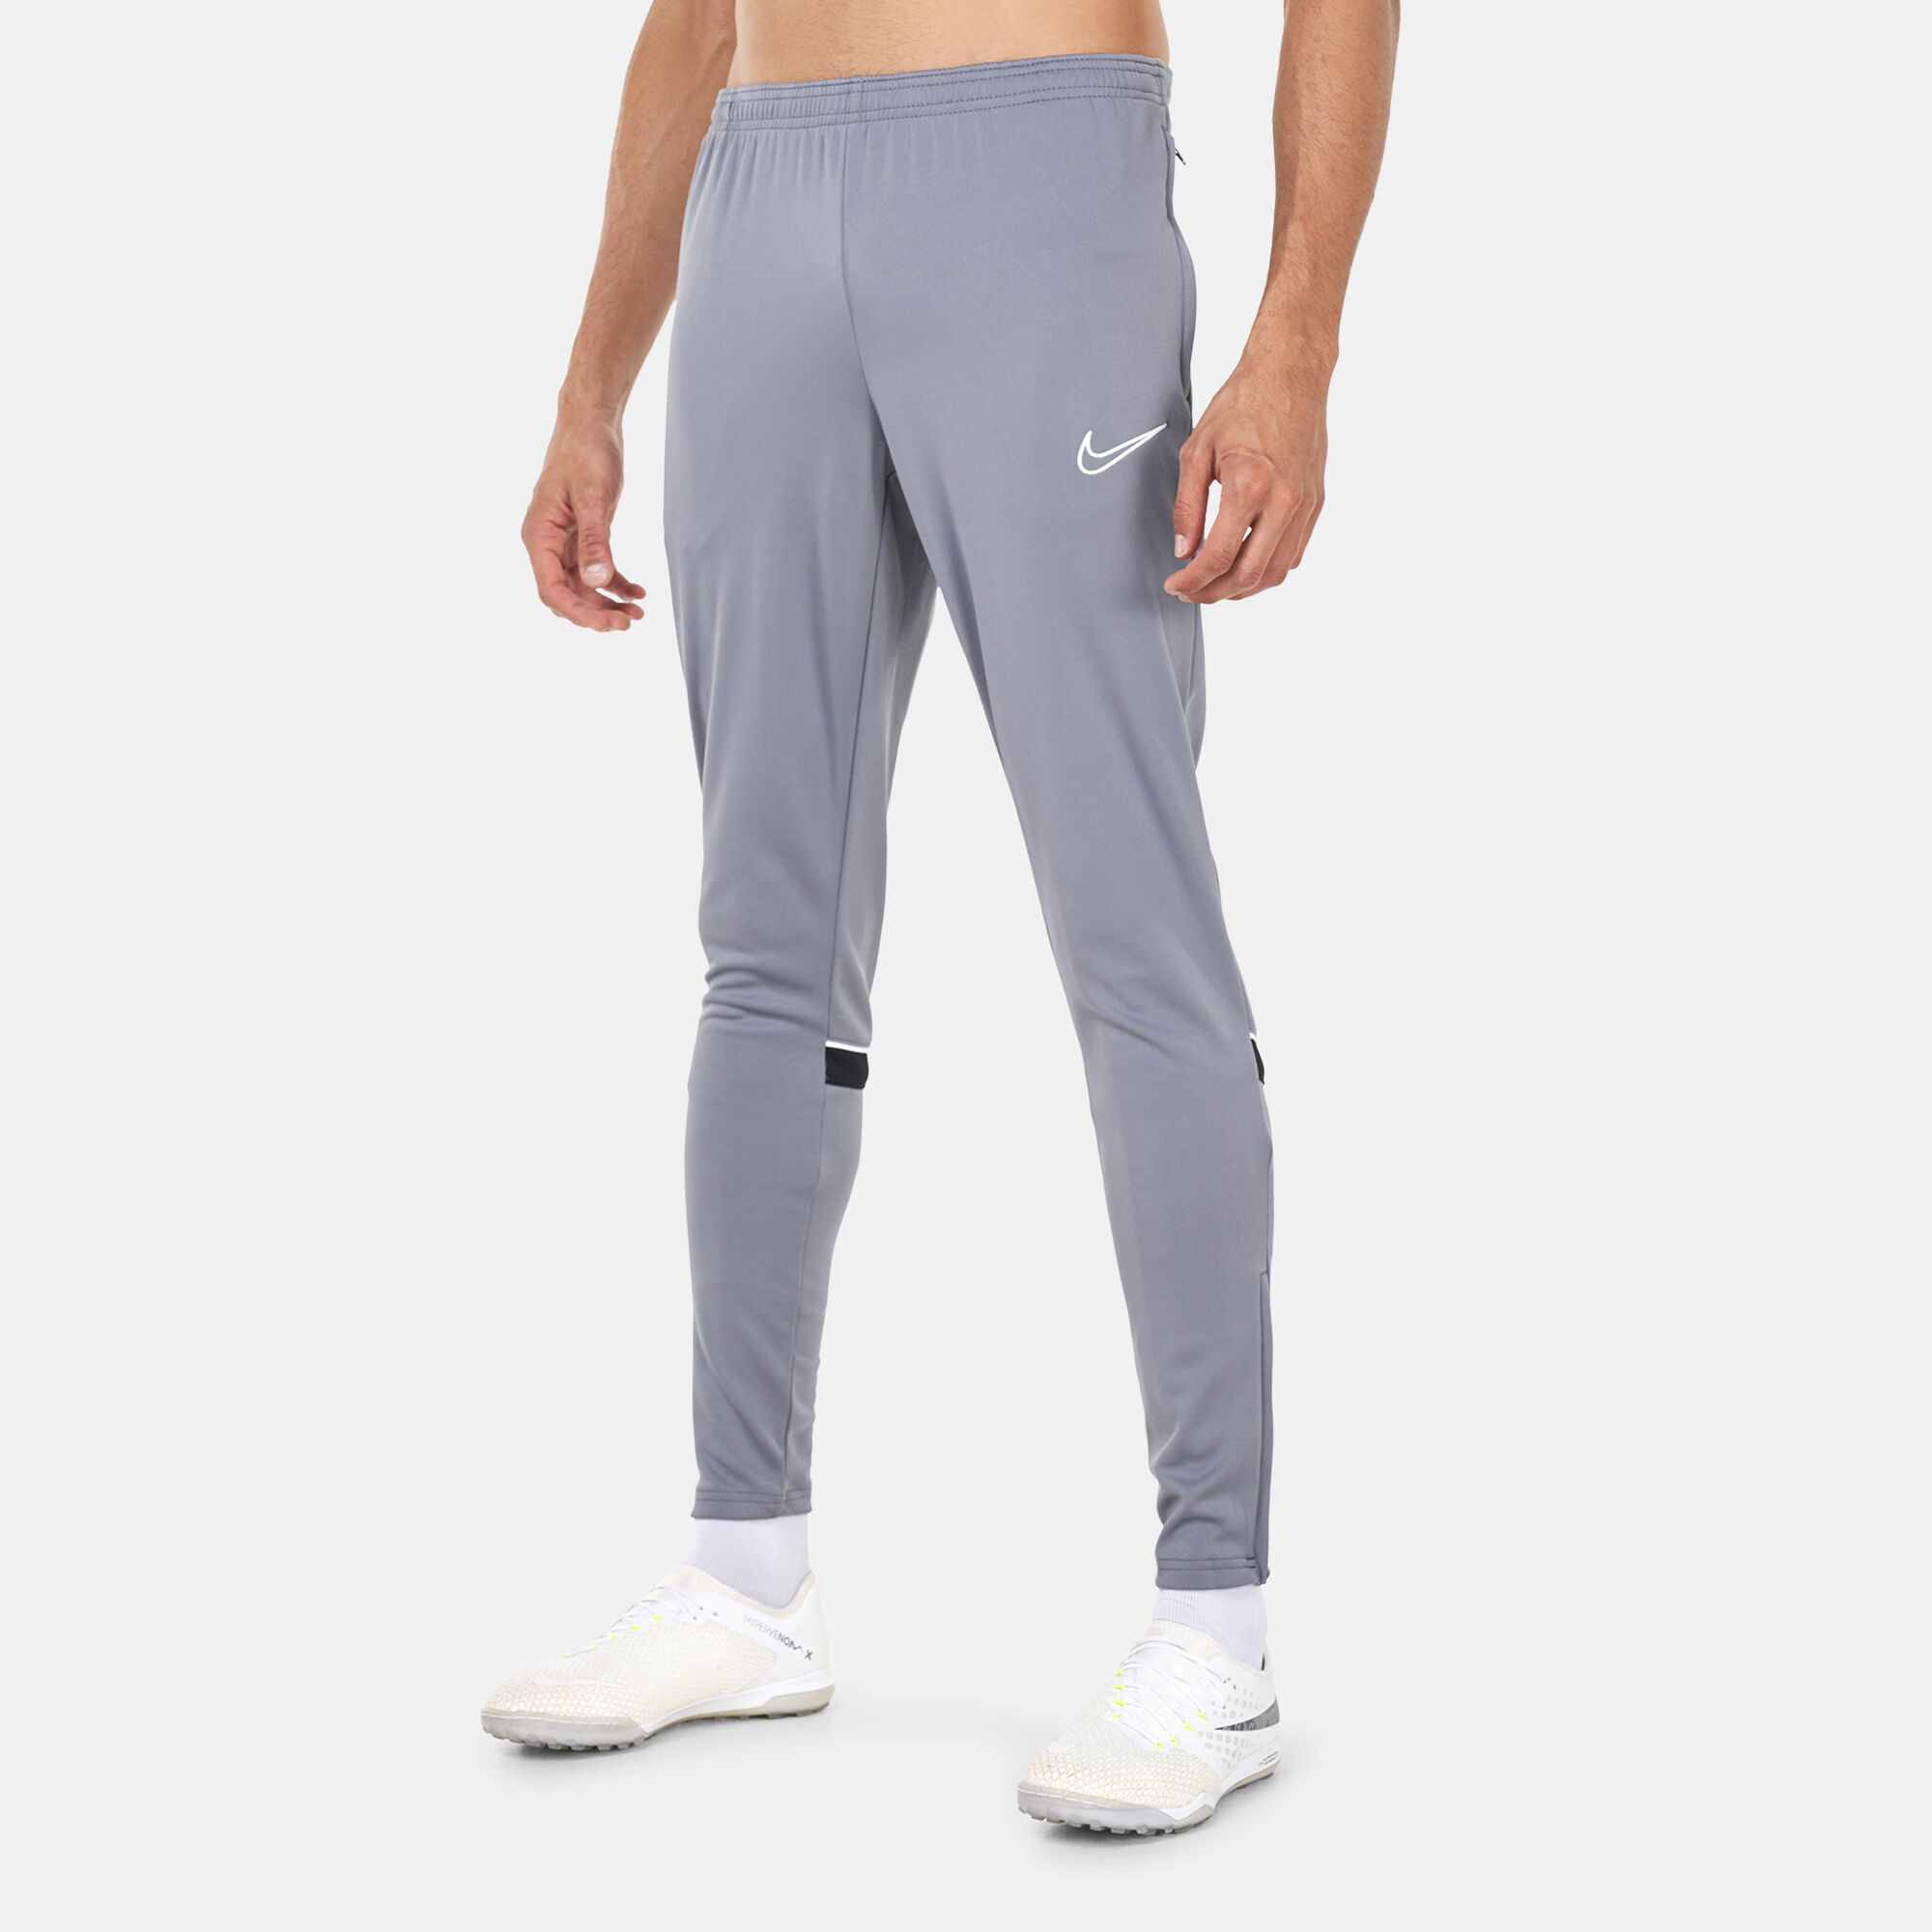 Nike Men's Phenom Elite Running Tights (Smoke Grey, Medium) - Walmart.com